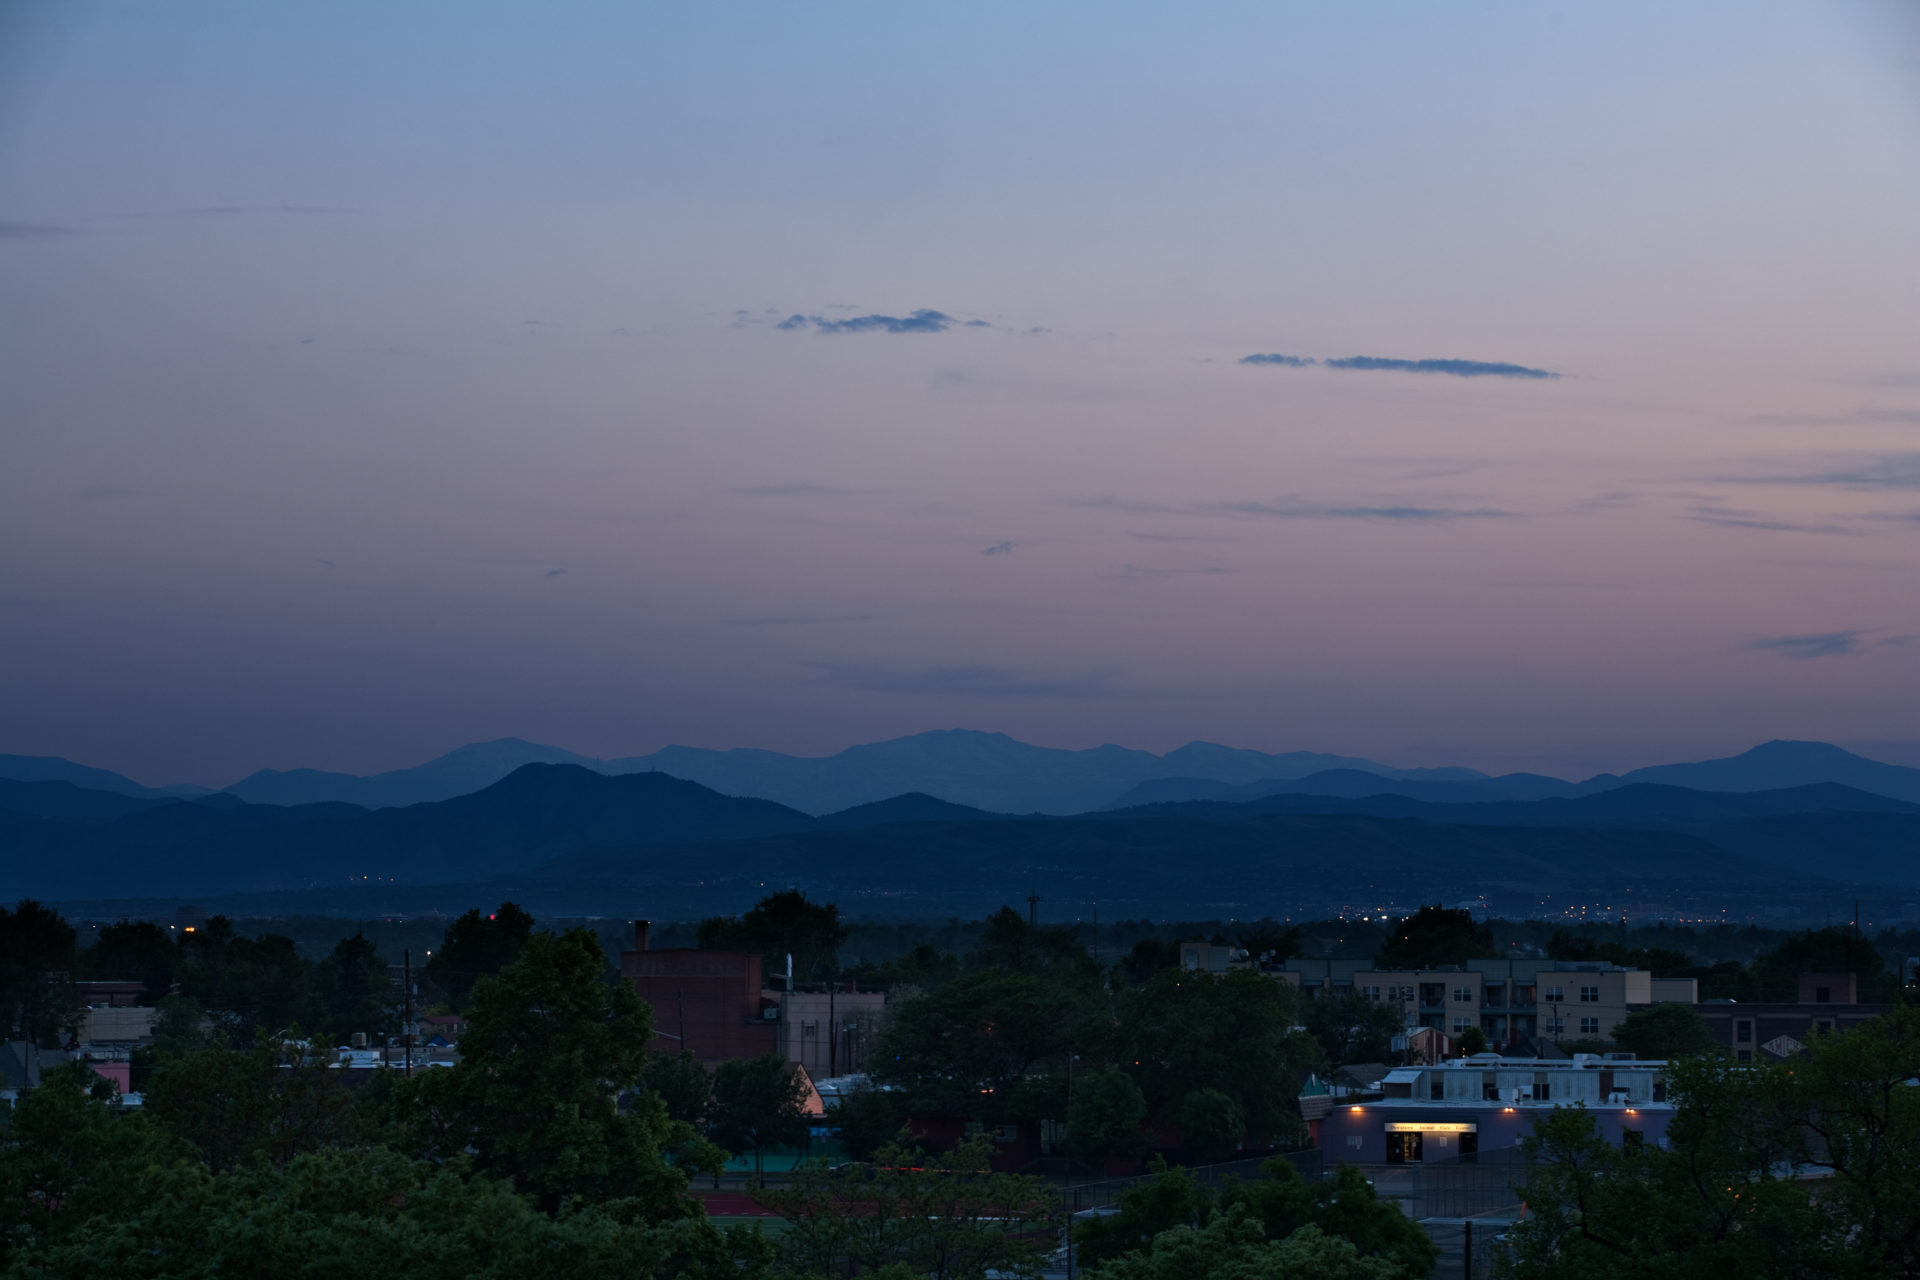 Mount Evans sunset - June 4, 2011